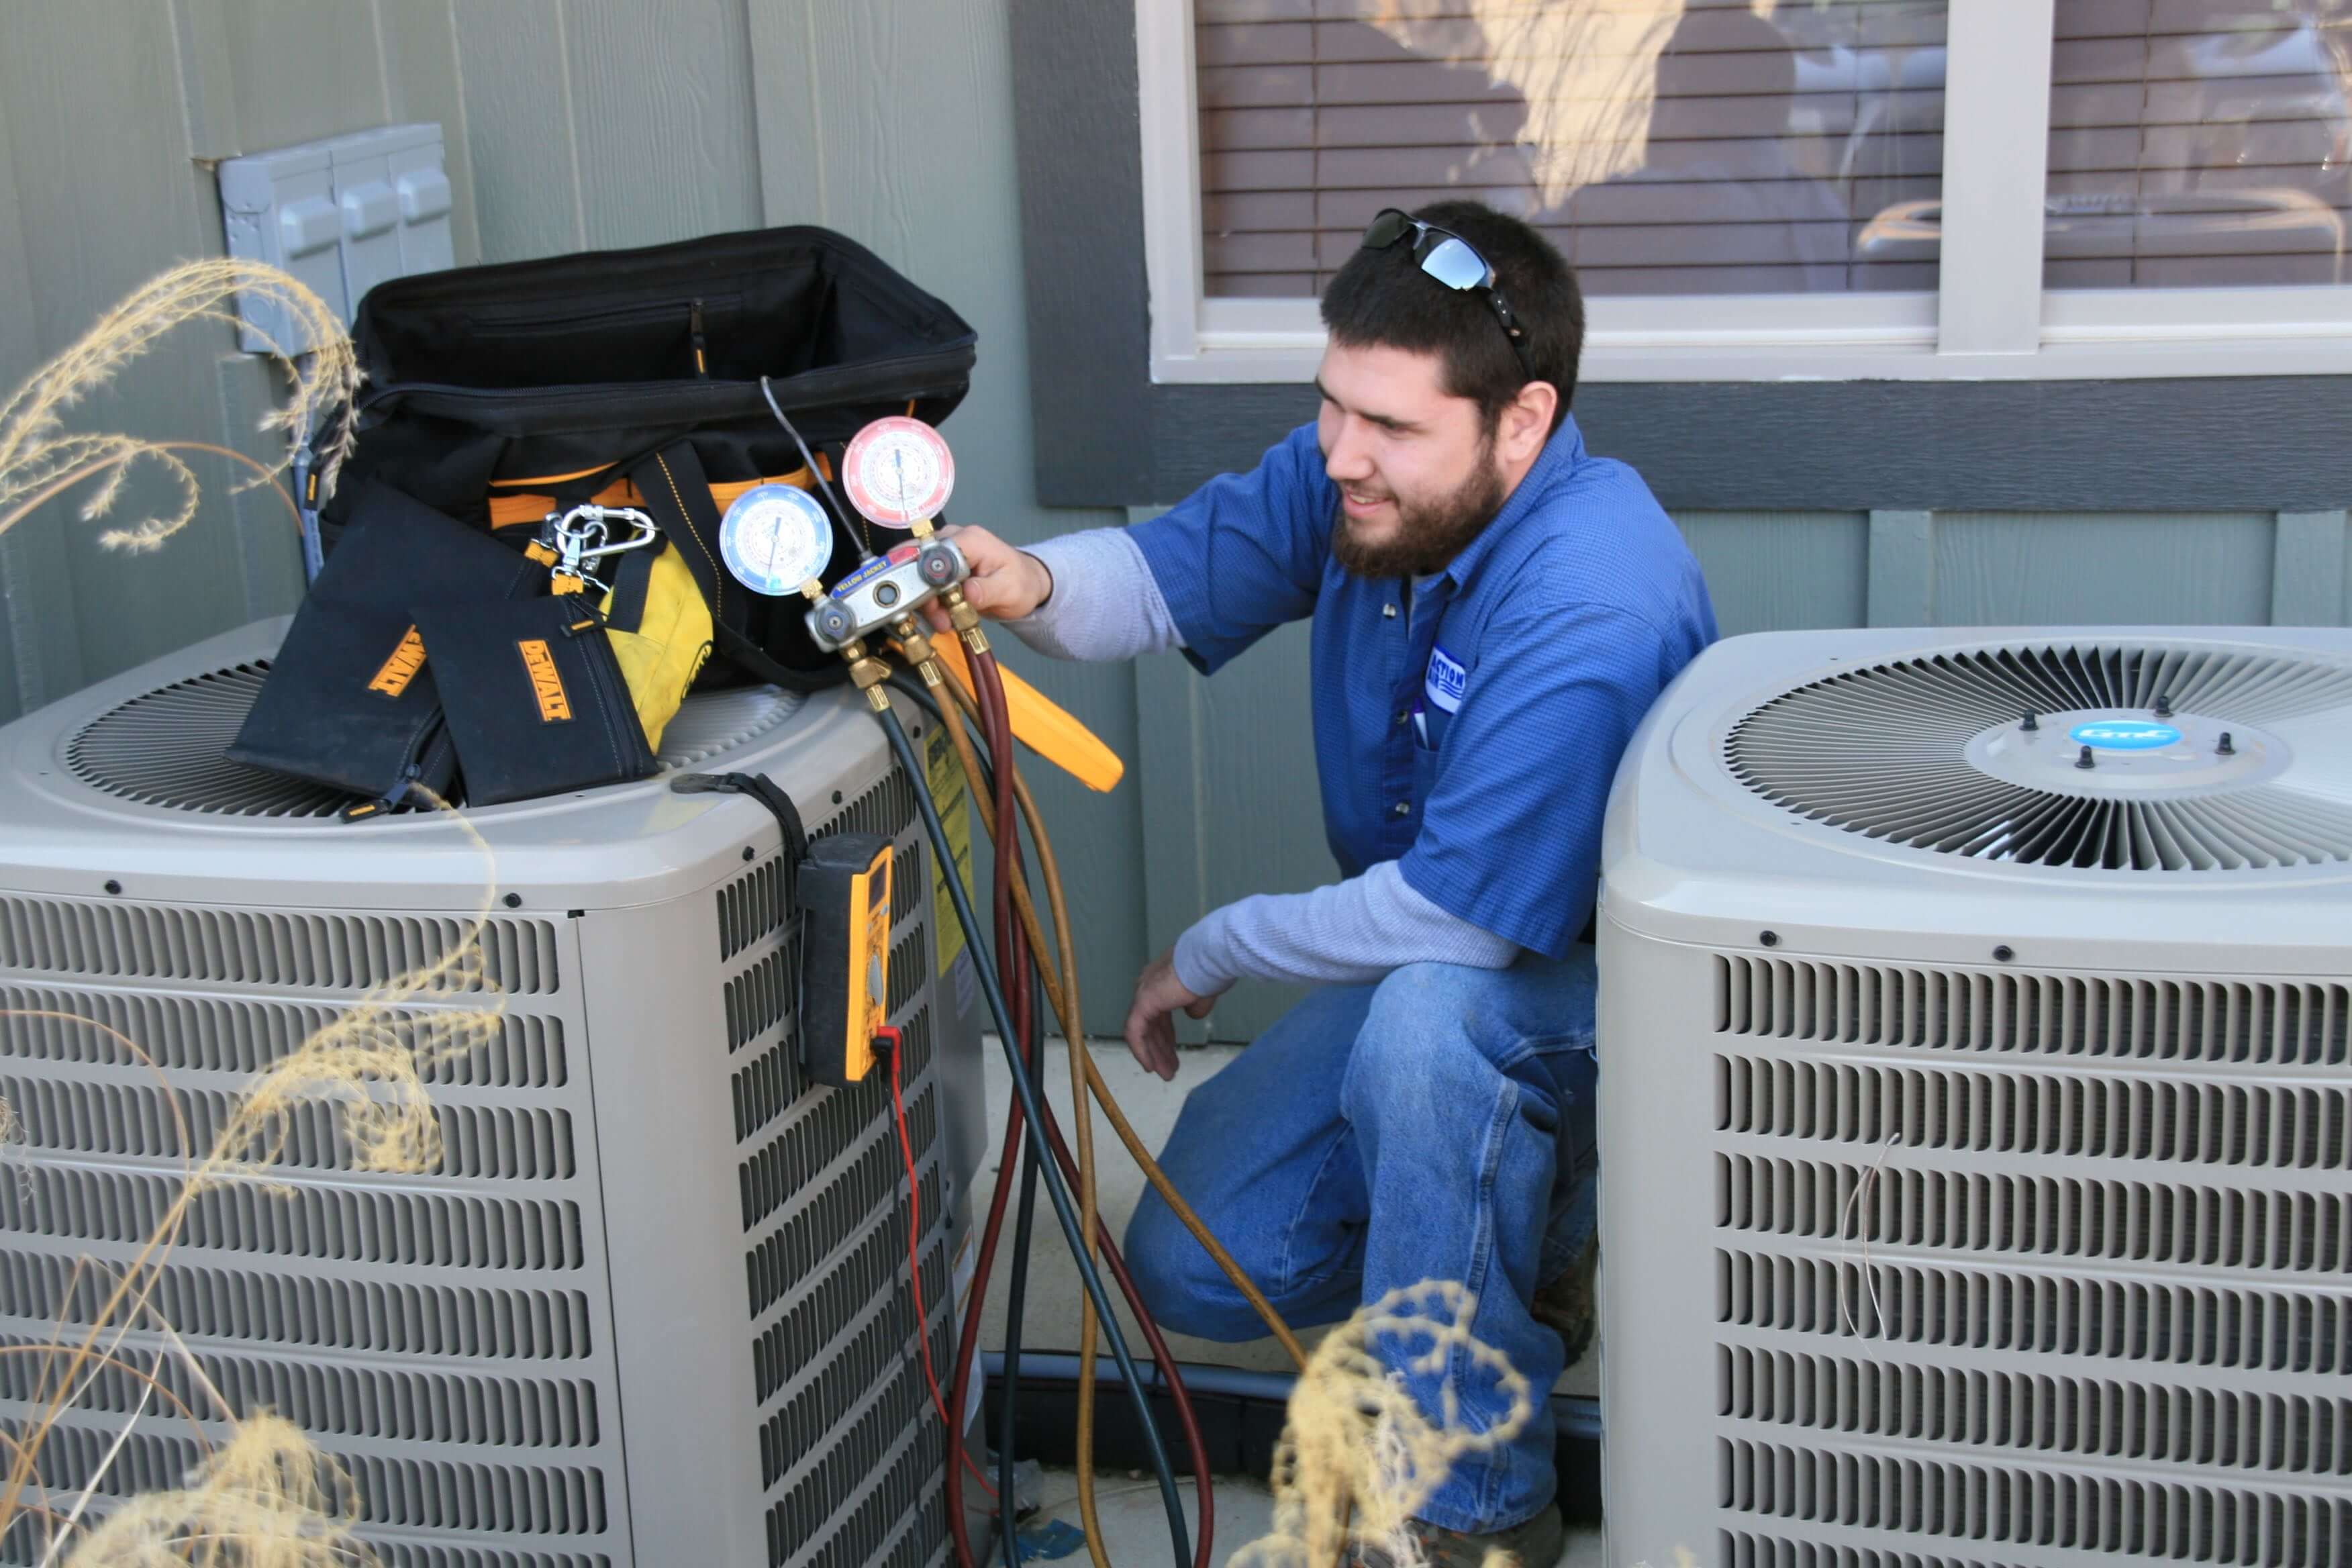 AC Repair, Air Conditioning HVAC Repair Services